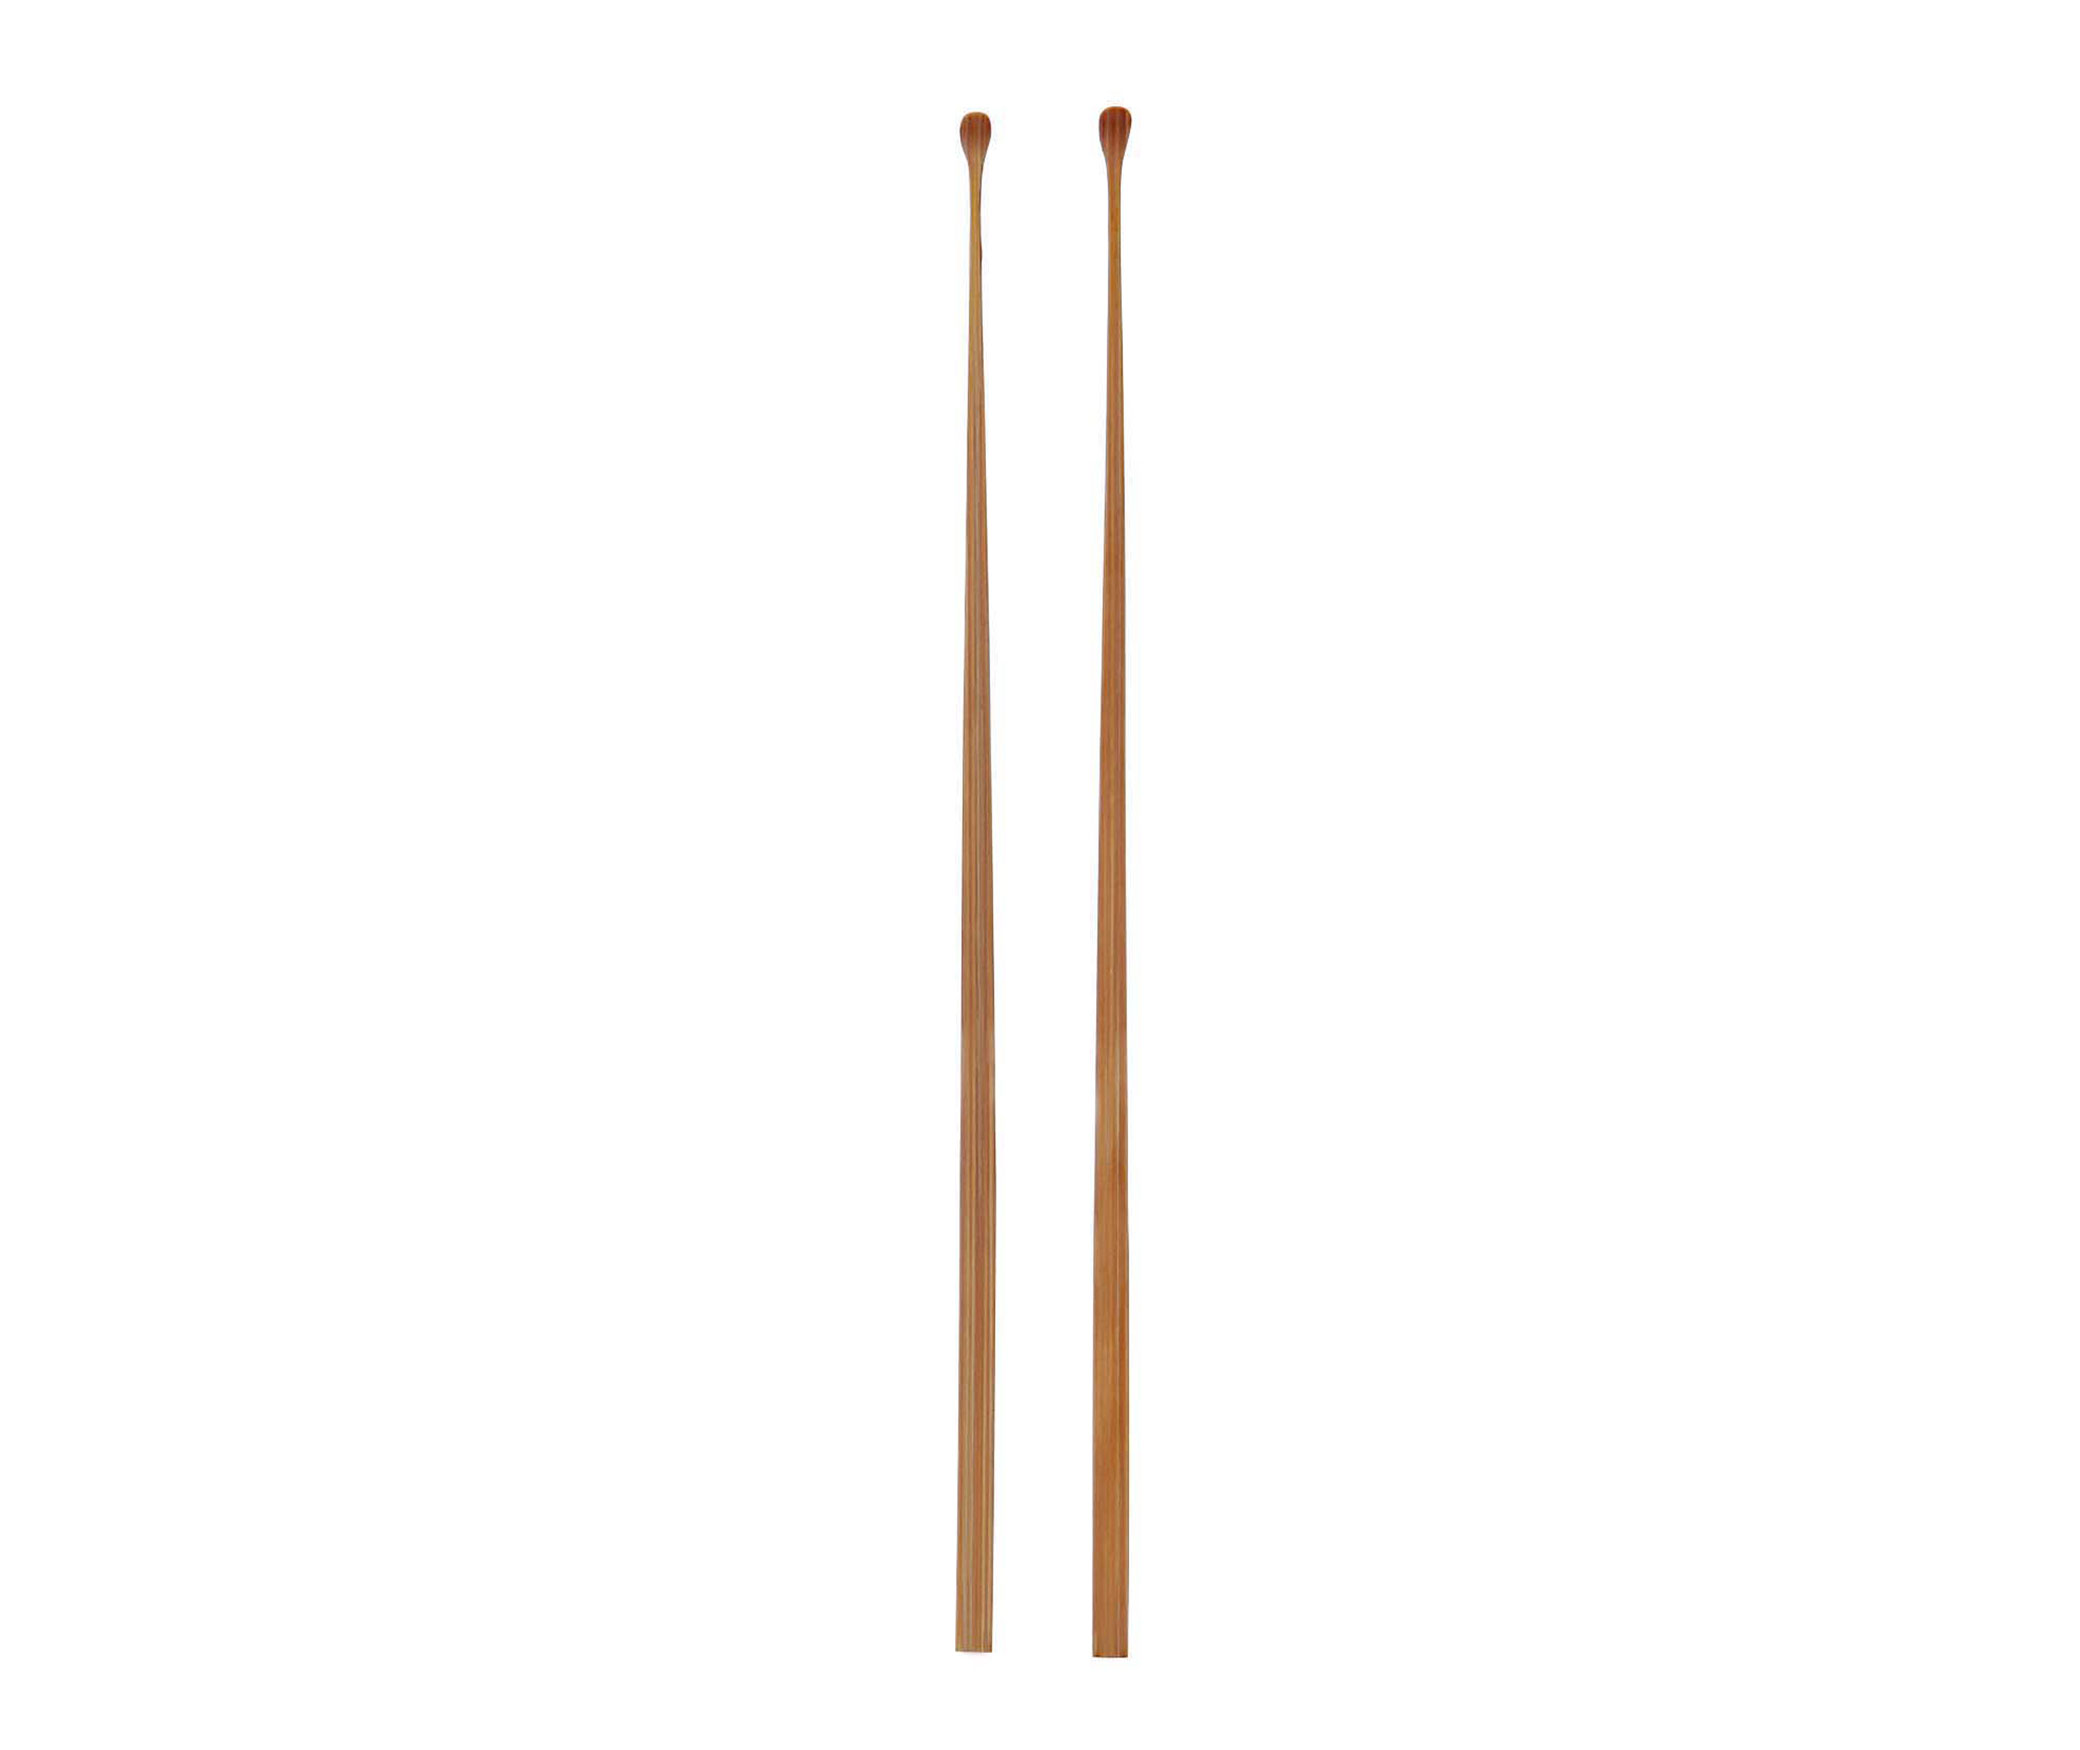 Seki Edge Traditional Bamboo Ear Picks (SS-803) removes ear wax